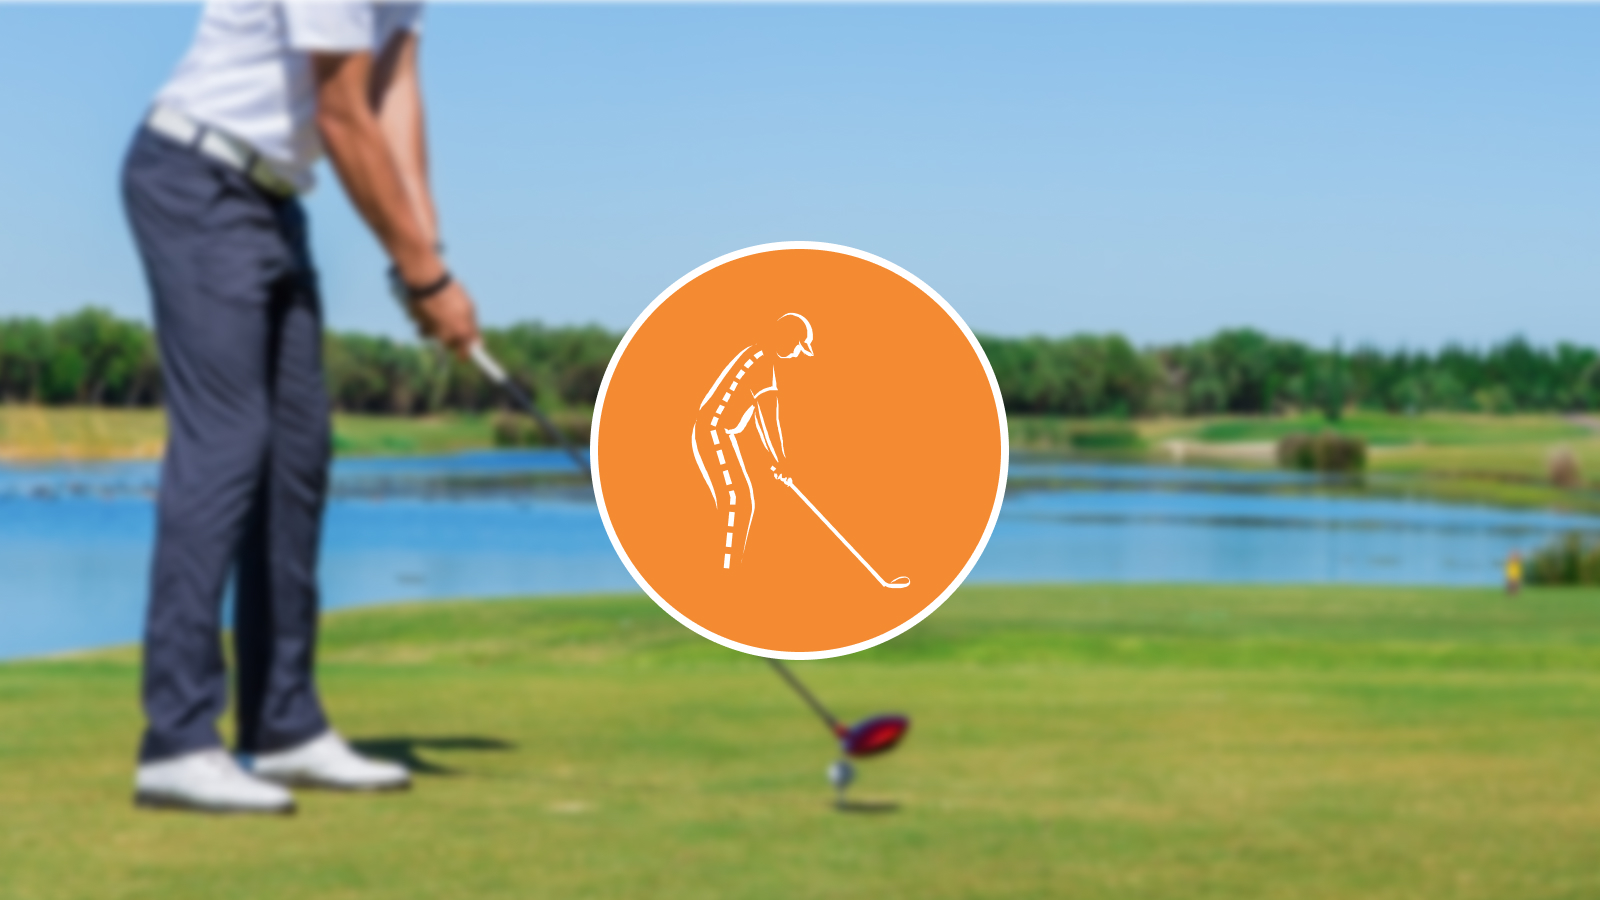 #GolfAtHome posture badge graphic